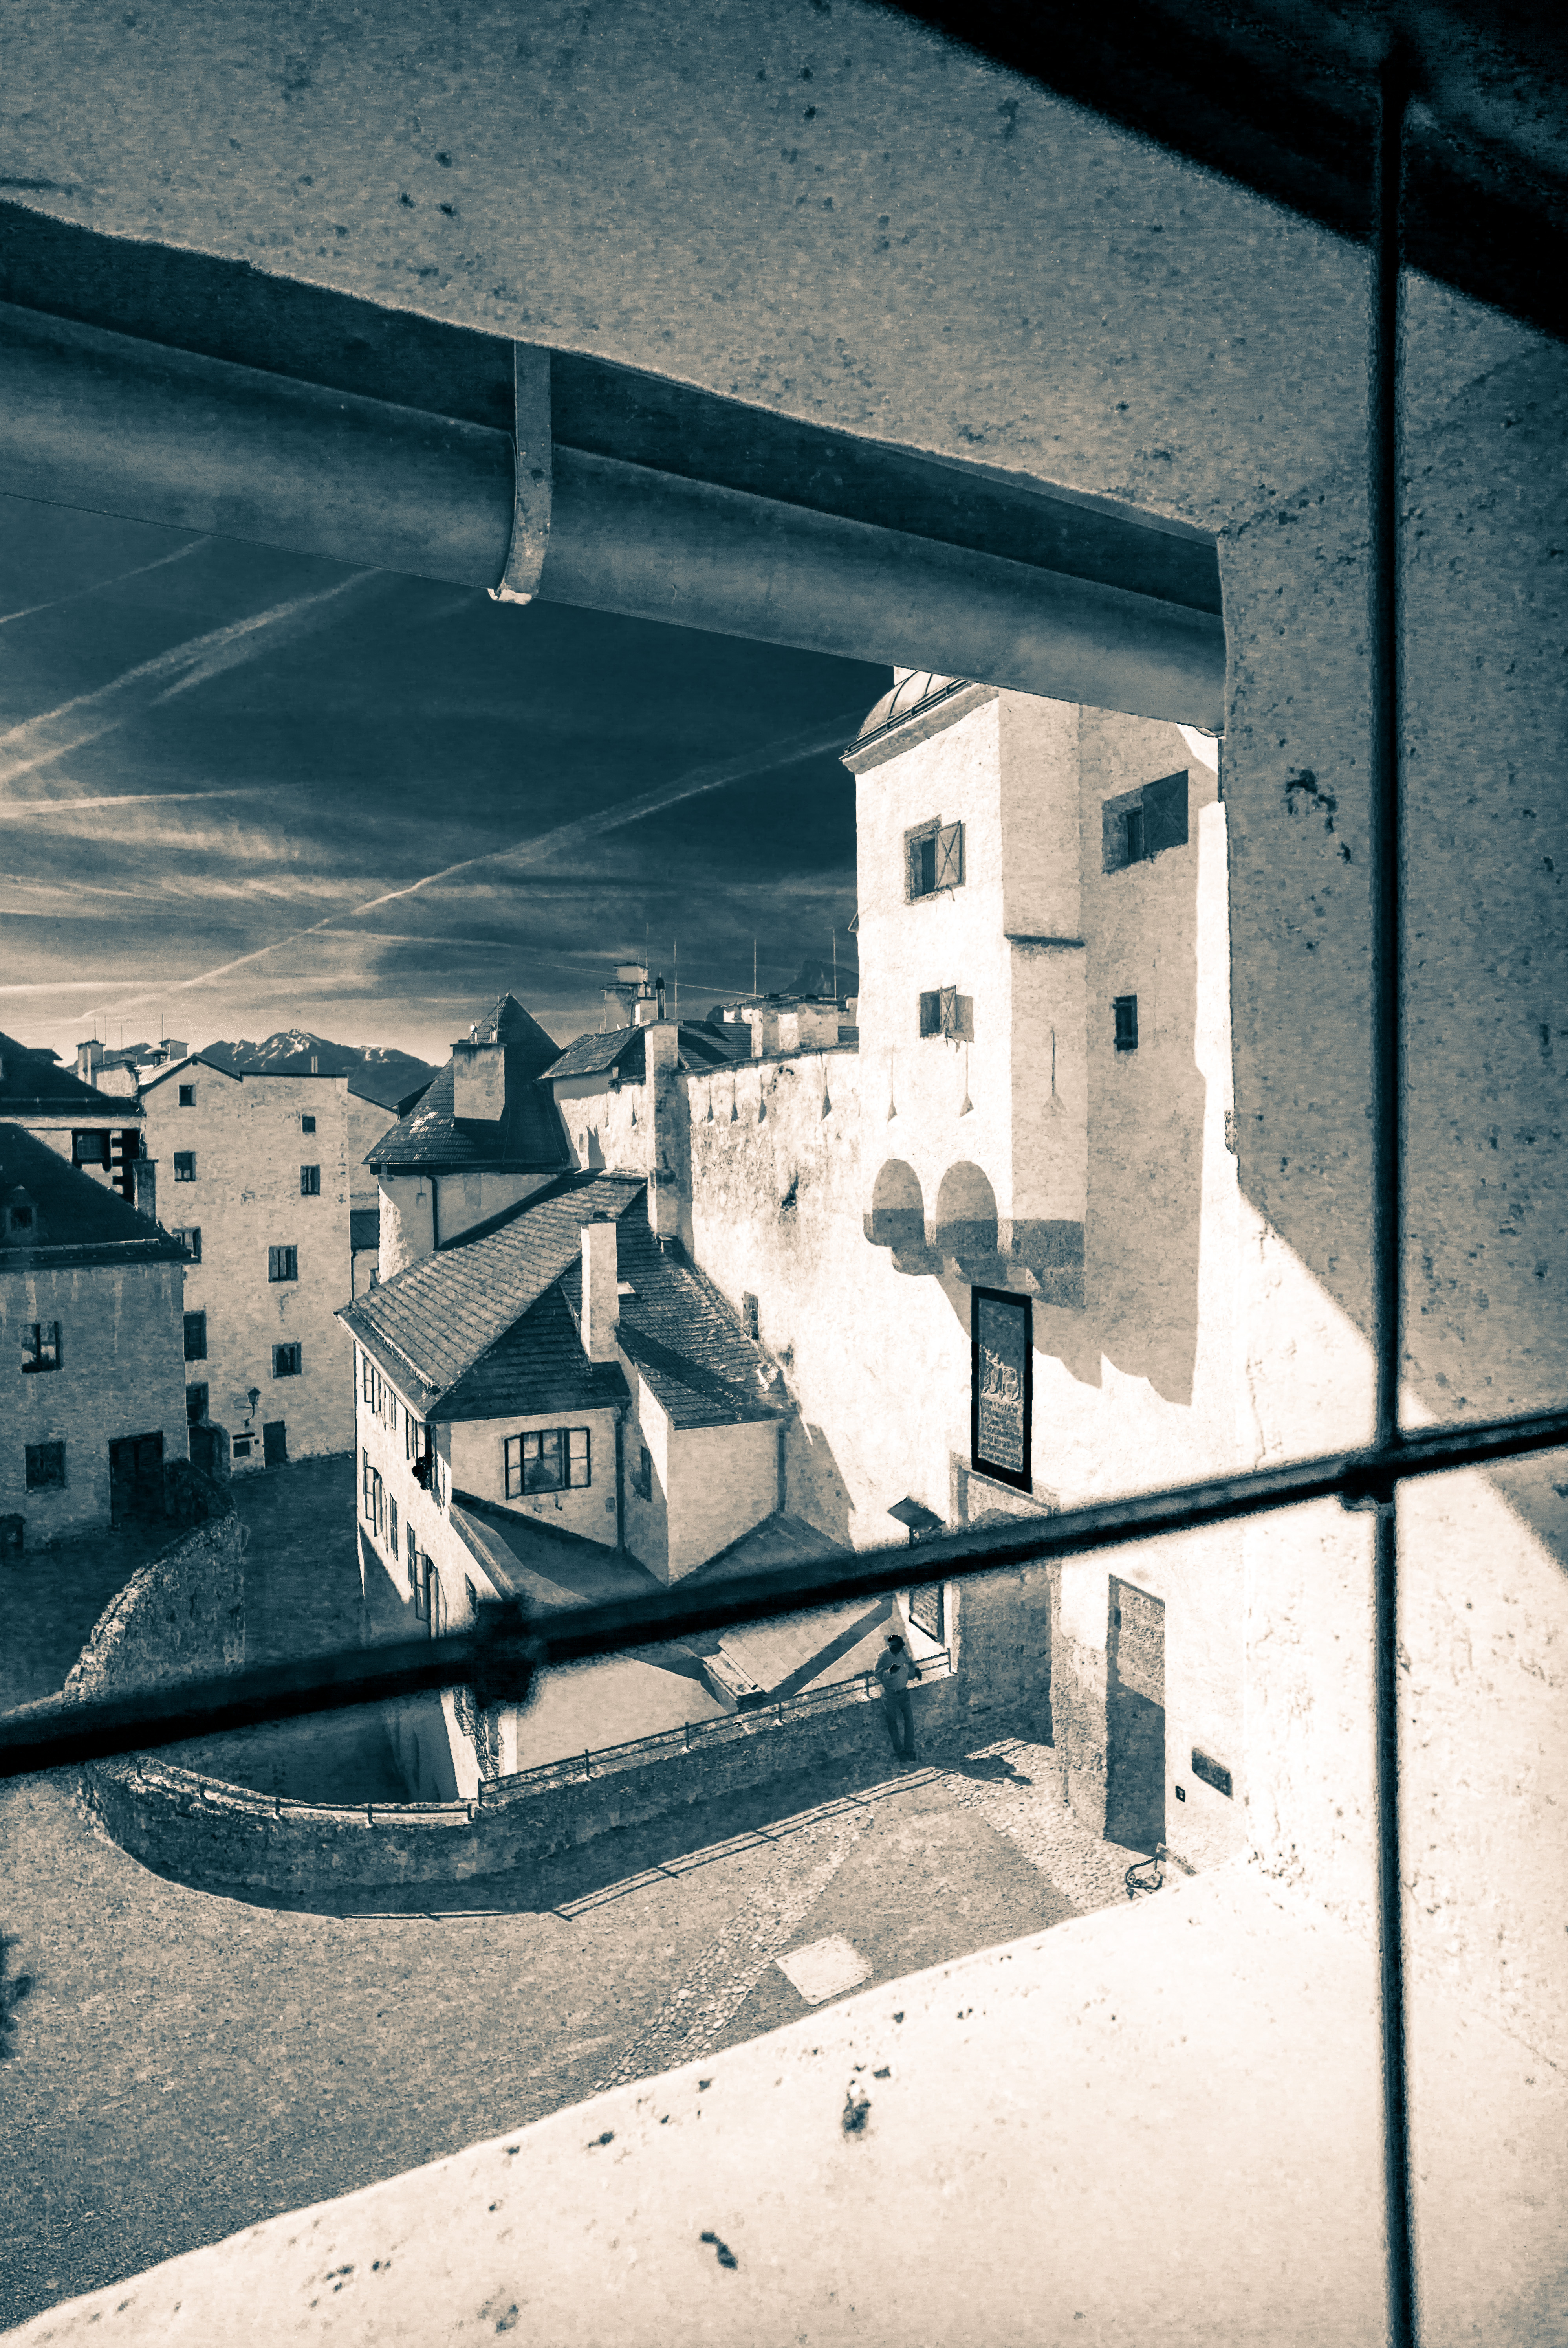 Looking out a window, HohensalzburgLeica M, Leica Super-Elmar-M 1:3.8/18mm, ISO 200, f/5.6, 1/2000 sec